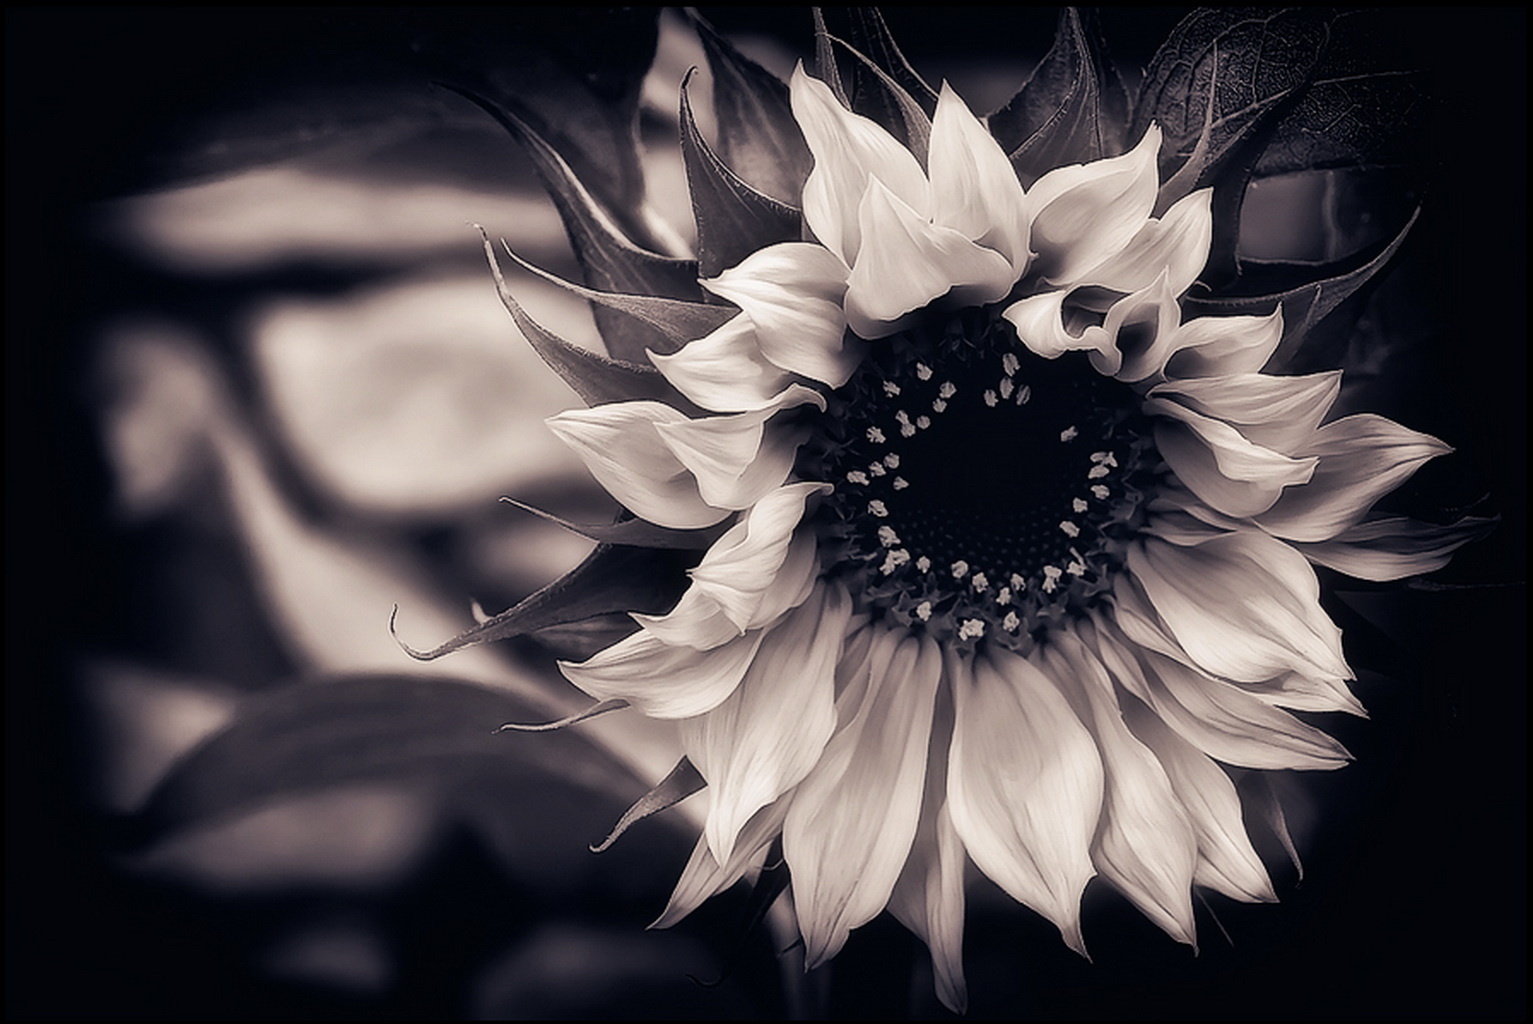 Wallpaper Sunflower Black And White Background Popular